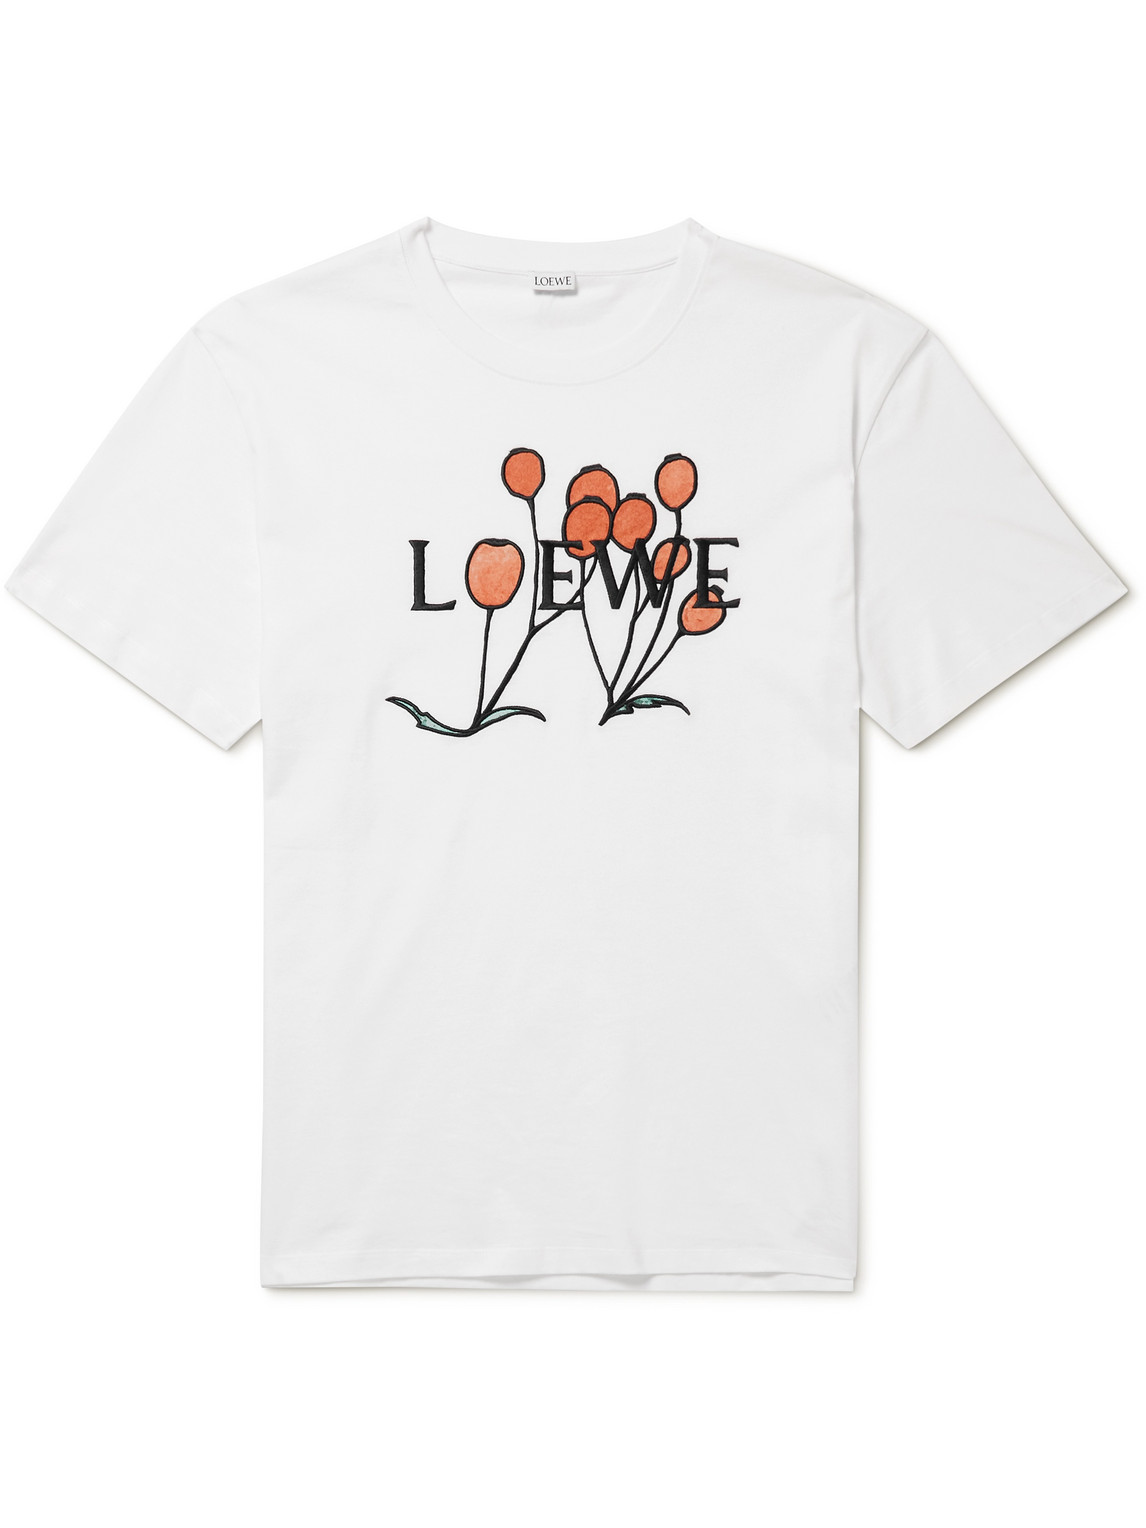 LOEWE T-Shirts for Men | ModeSens